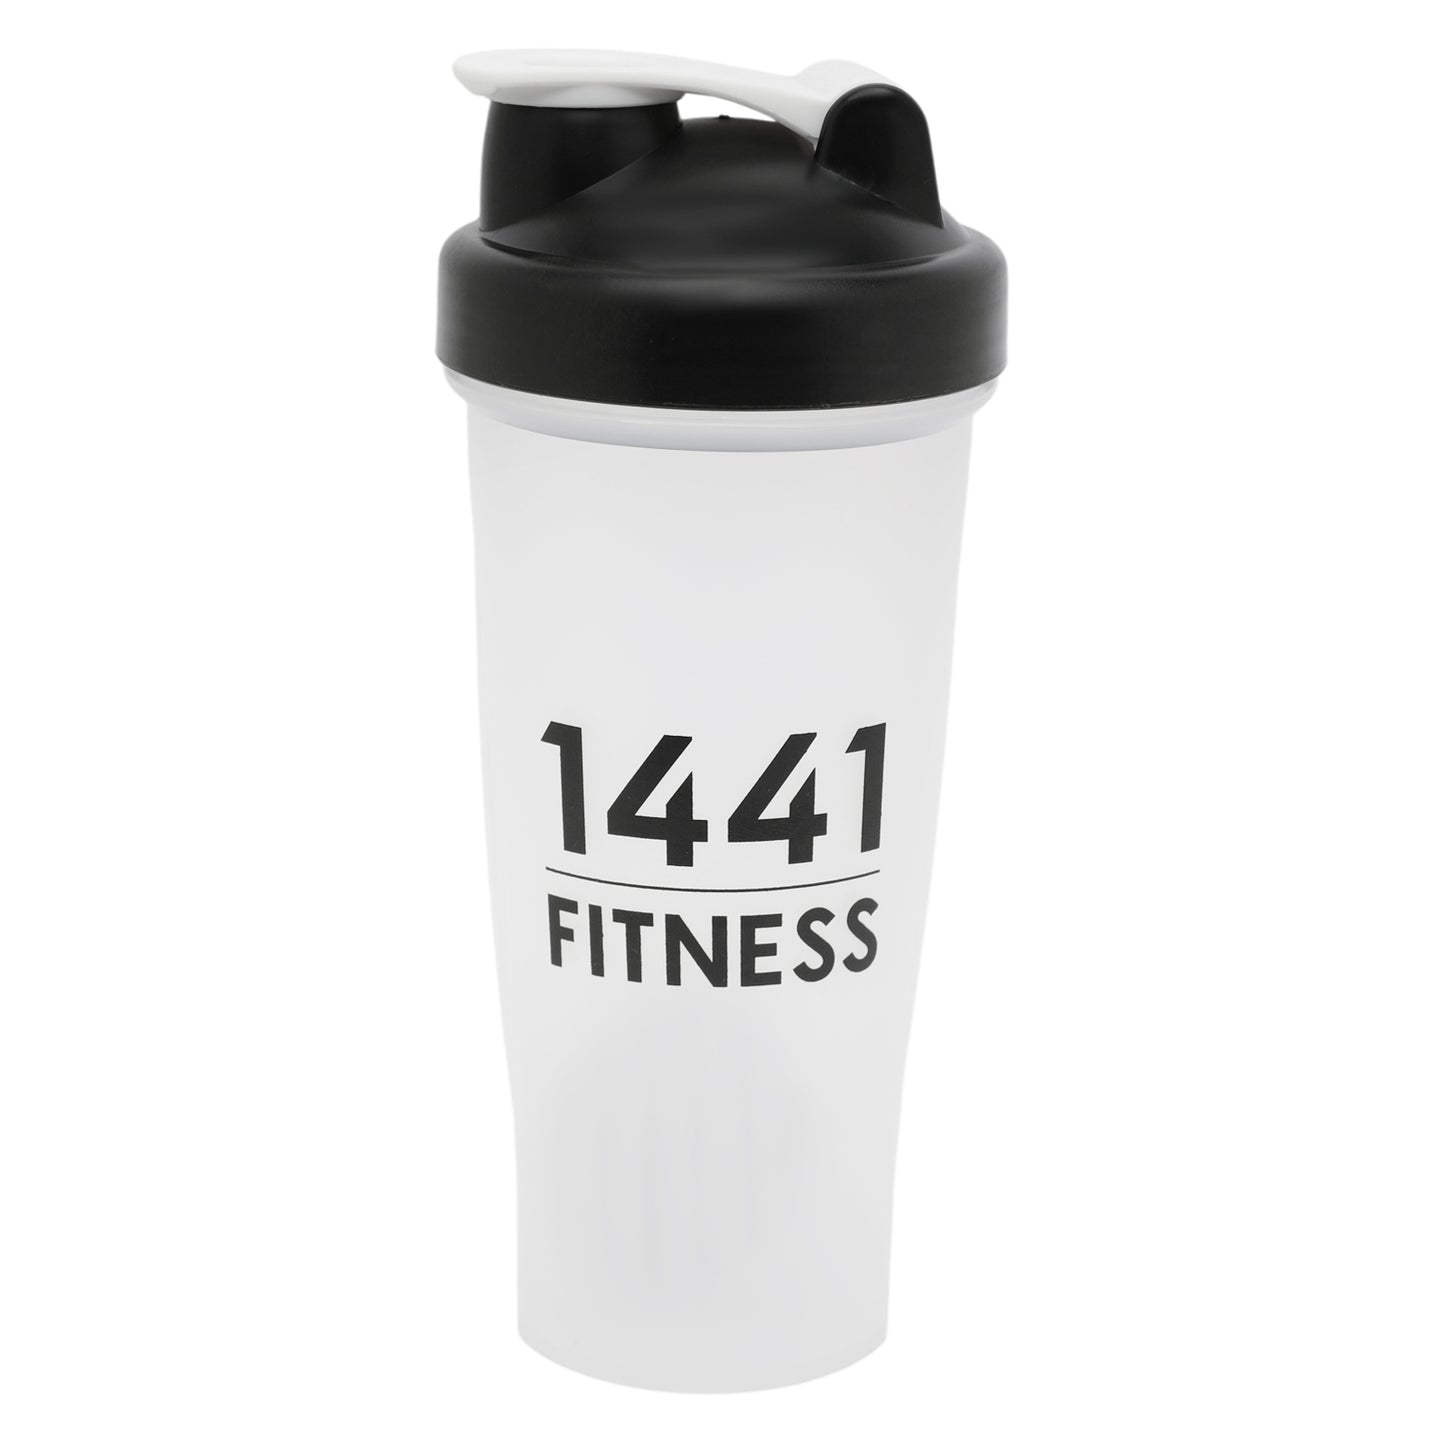 1441 Fitness Shaker Water Bottle